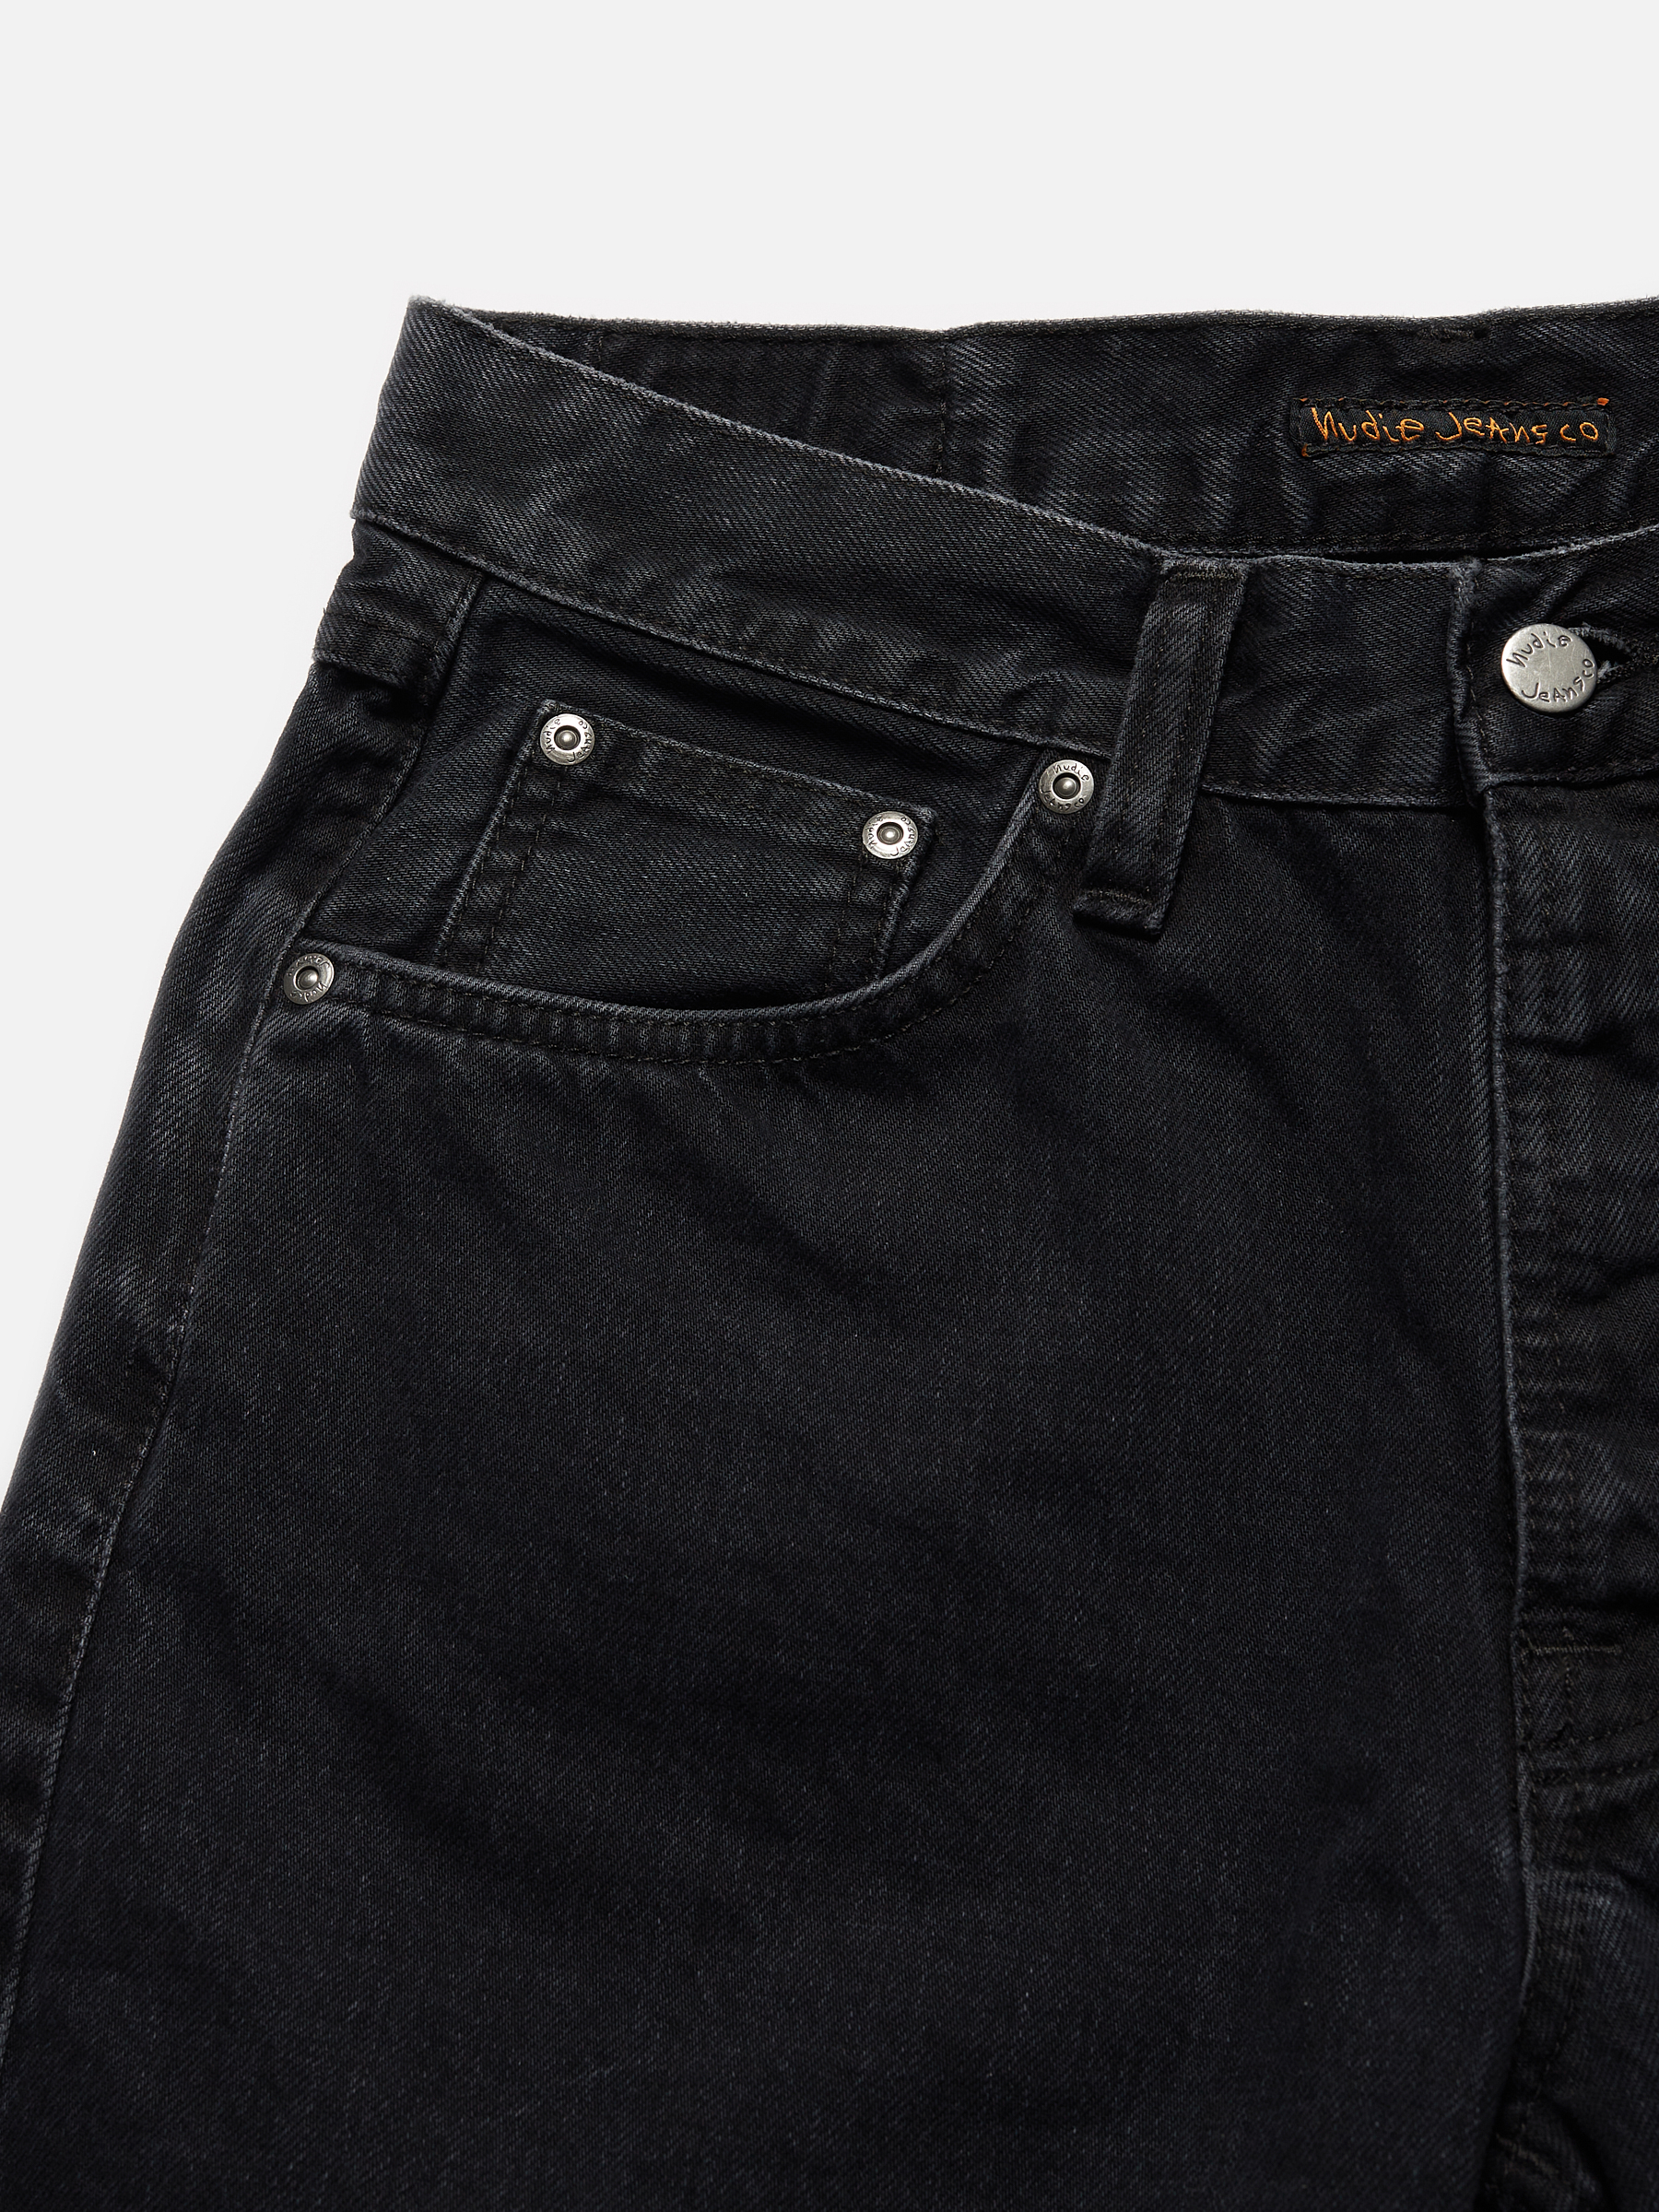 Jeans-Shorts Josh - Black Ink